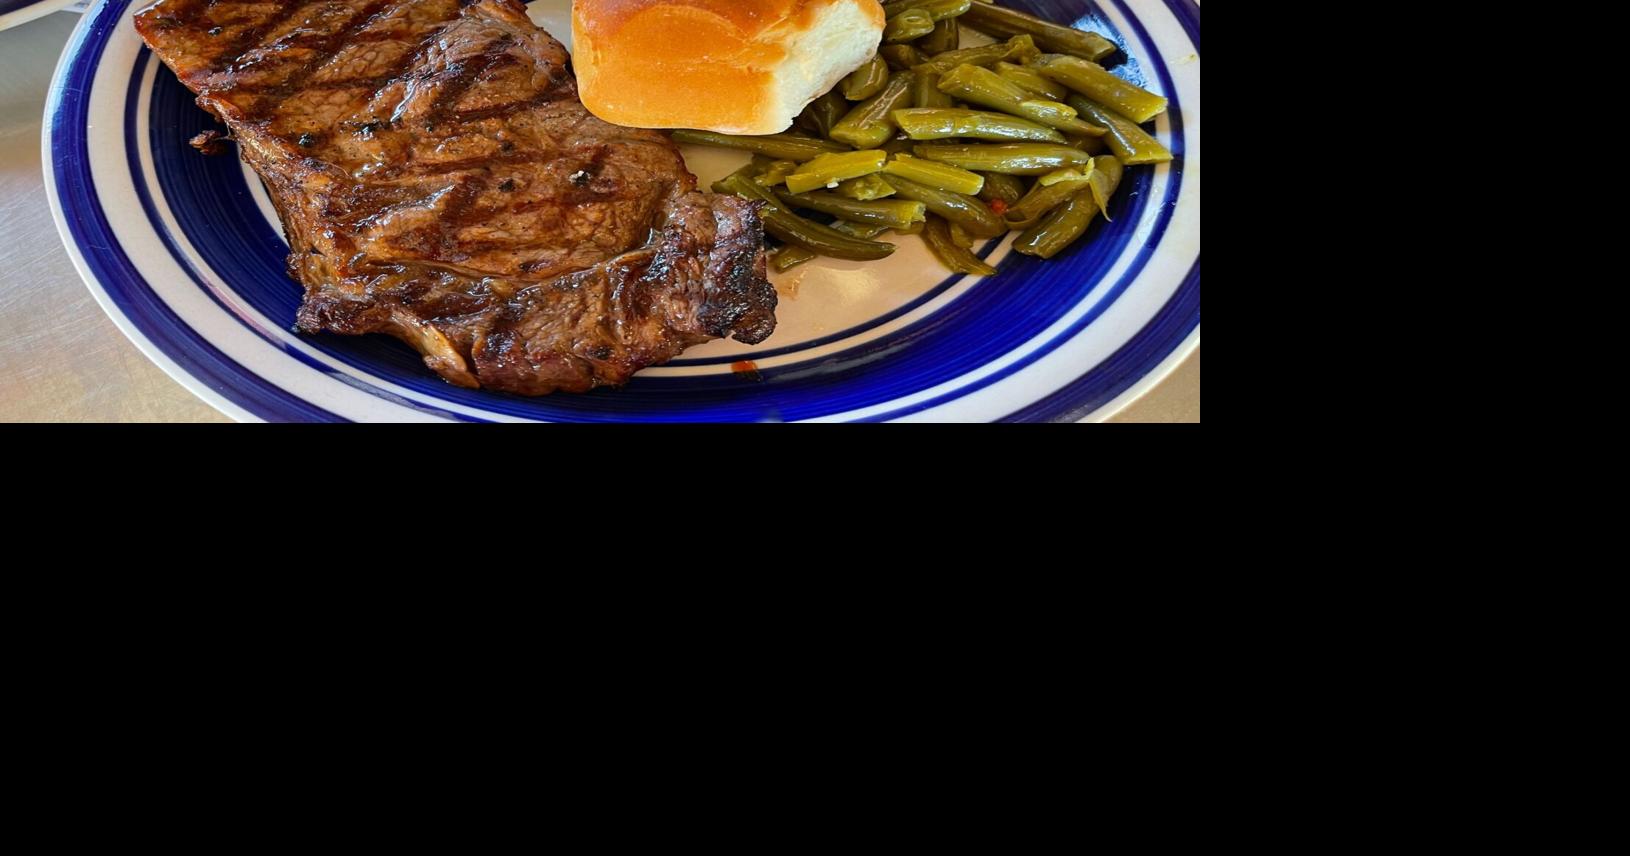 American Legion Post 34 to serve free steak dinners to veterans on